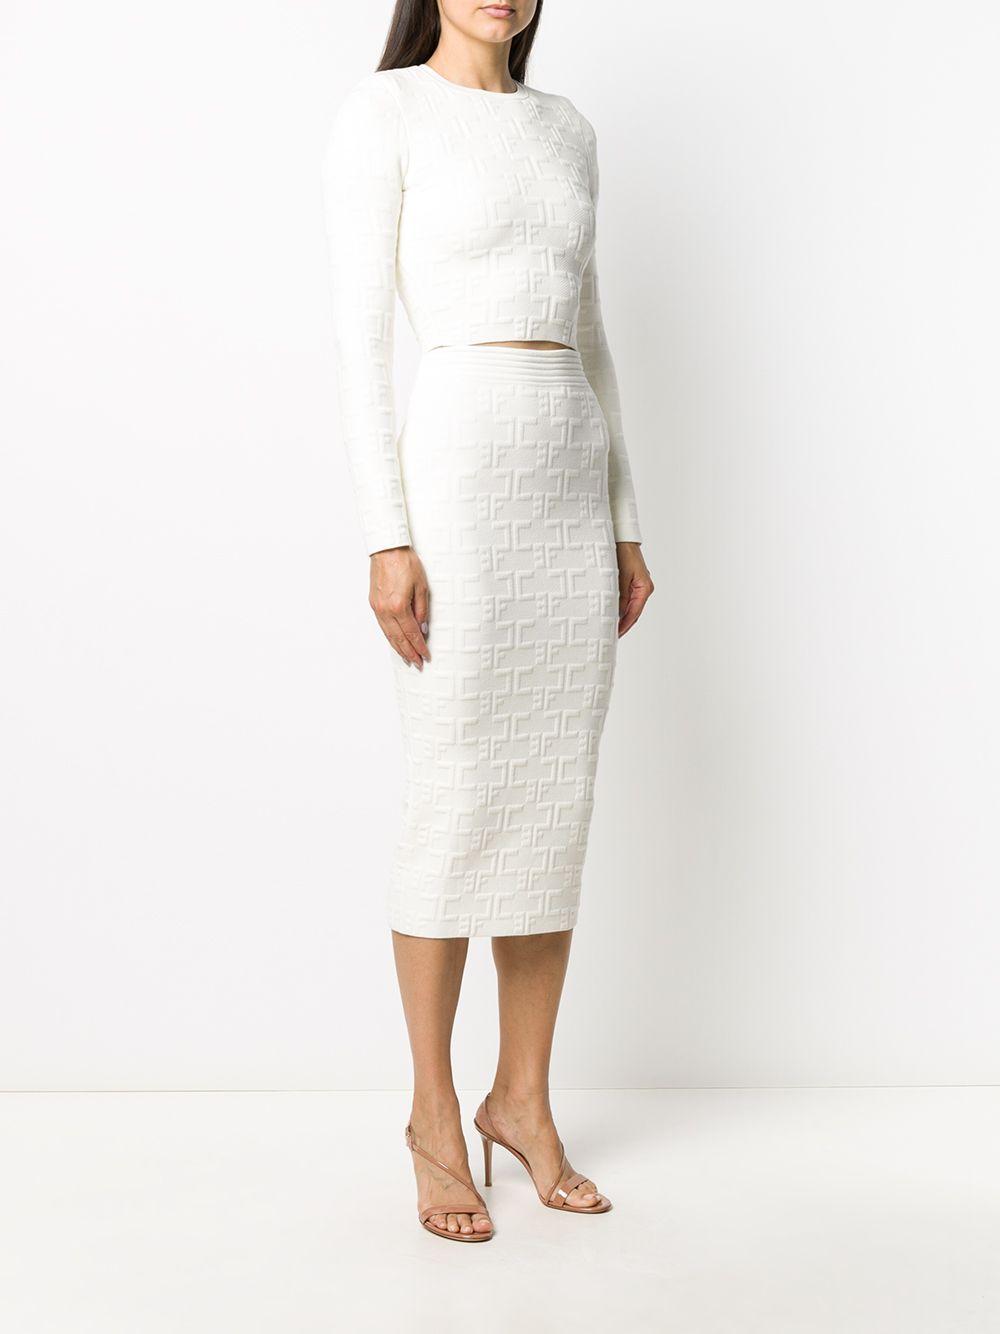 Elisabetta Franchi Logo Knit Skirt Suit in White - Lyst